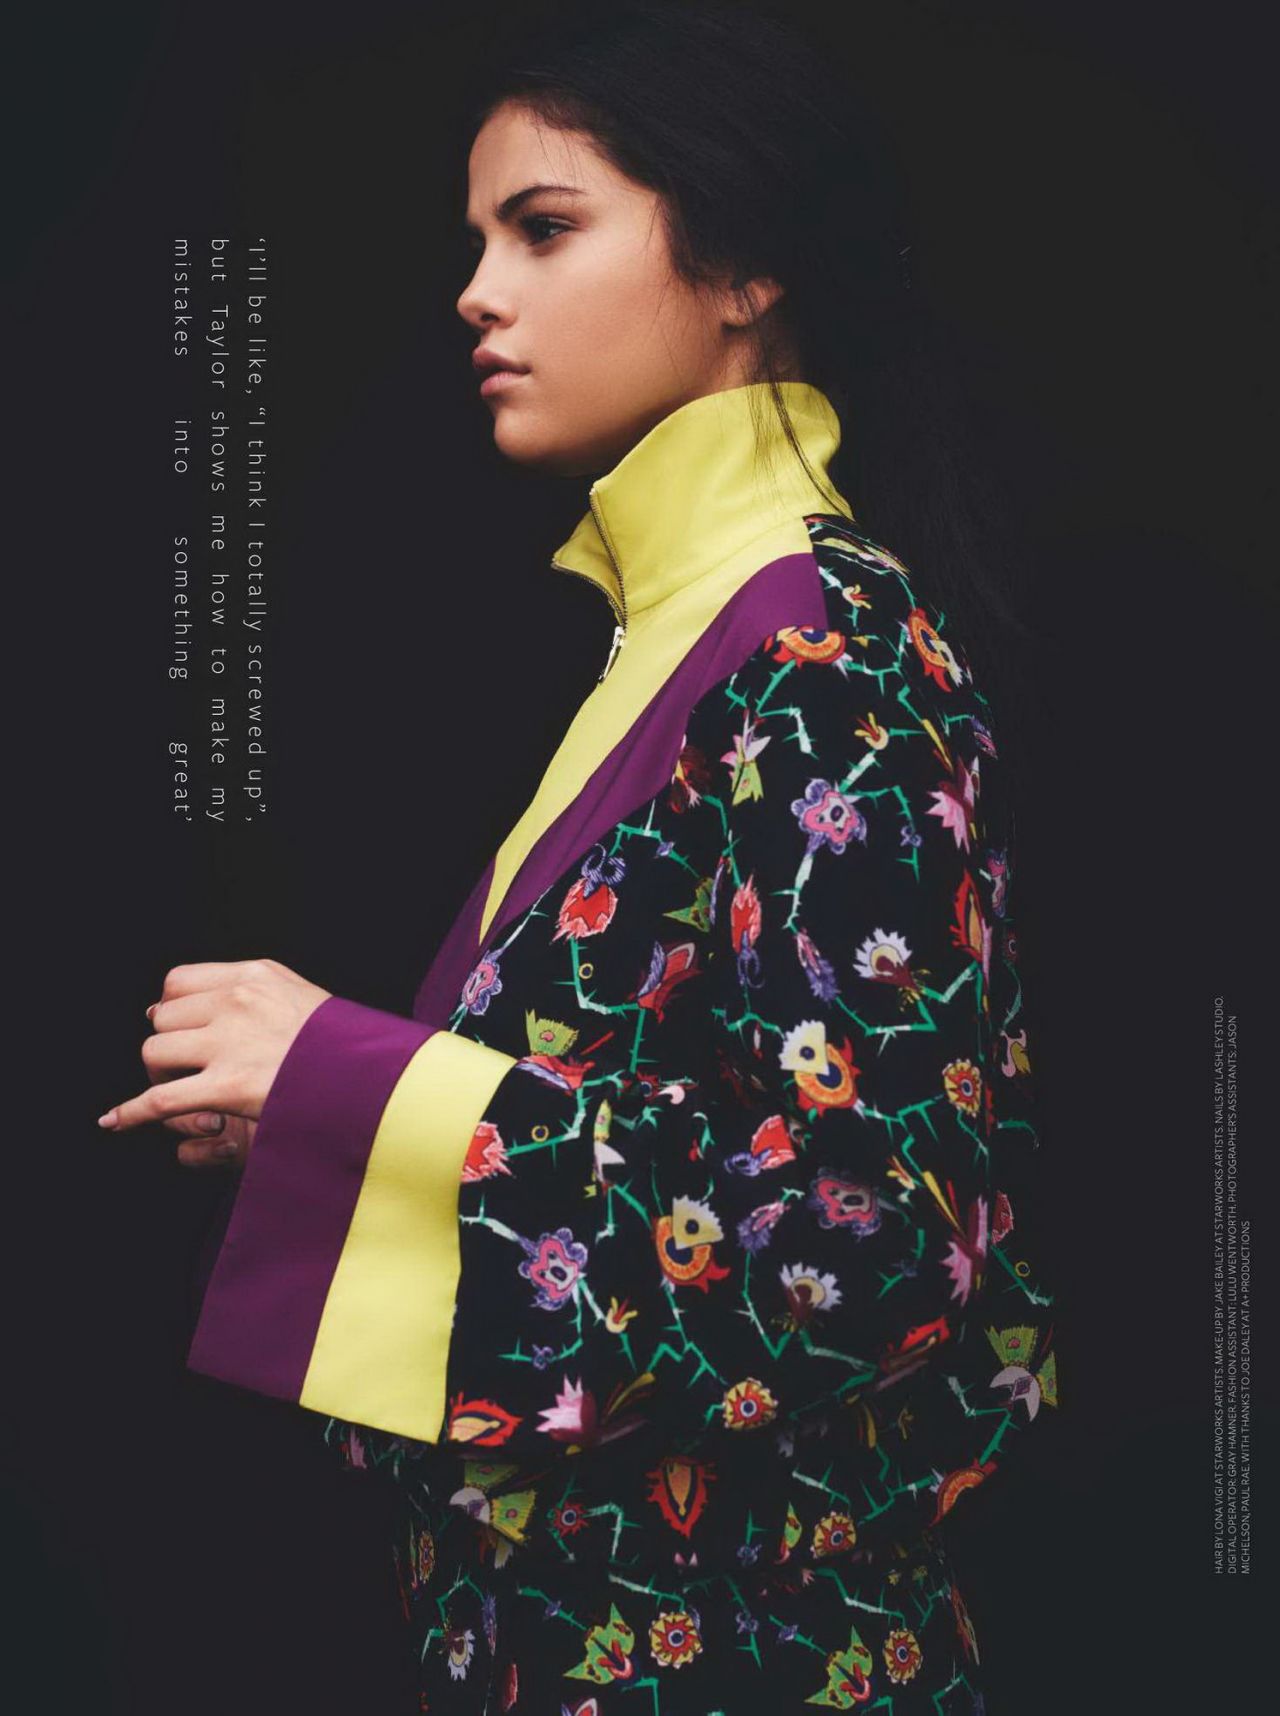 Selena Gomez InStyle Magzine Wallpapers